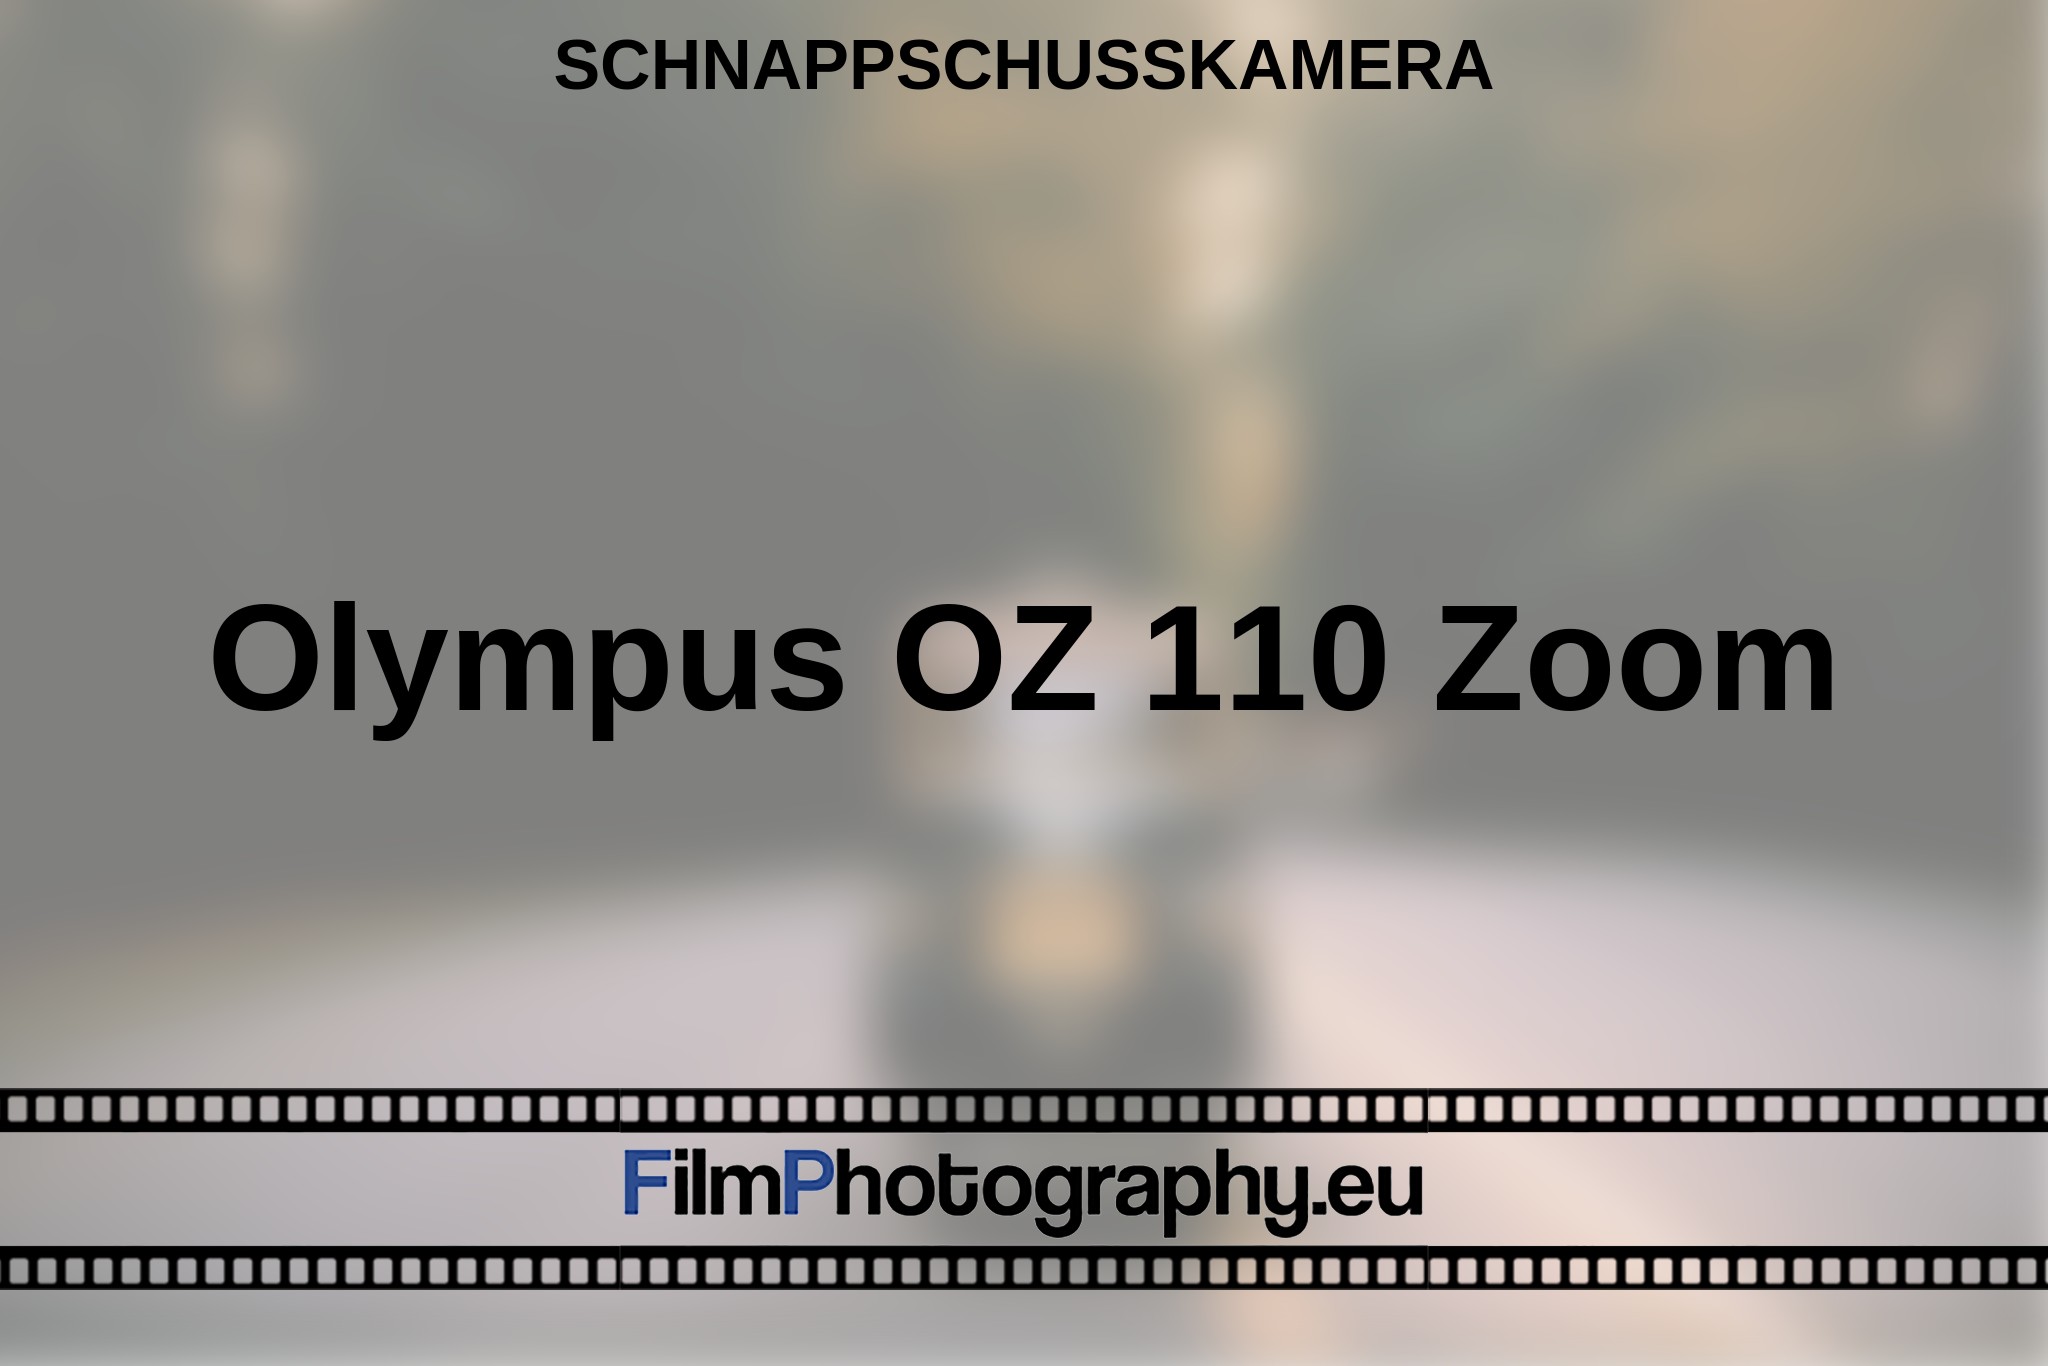 olympus-oz-110-zoom-schnappschusskamera-bnv.jpg